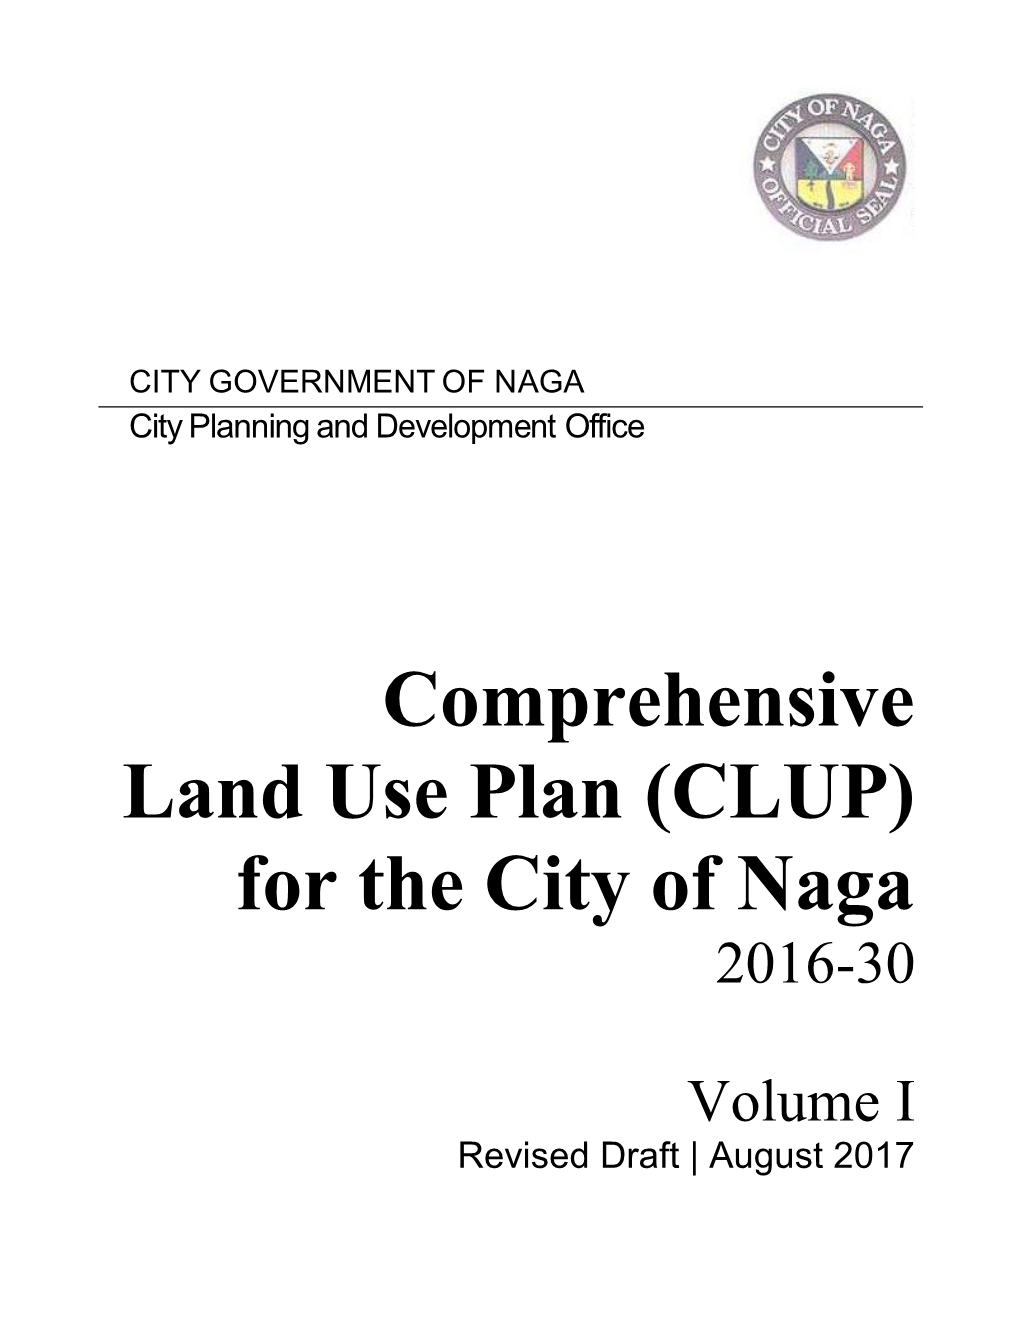 Comprehensive Land Use Plan (CLUP) for the City of Naga 2016-30